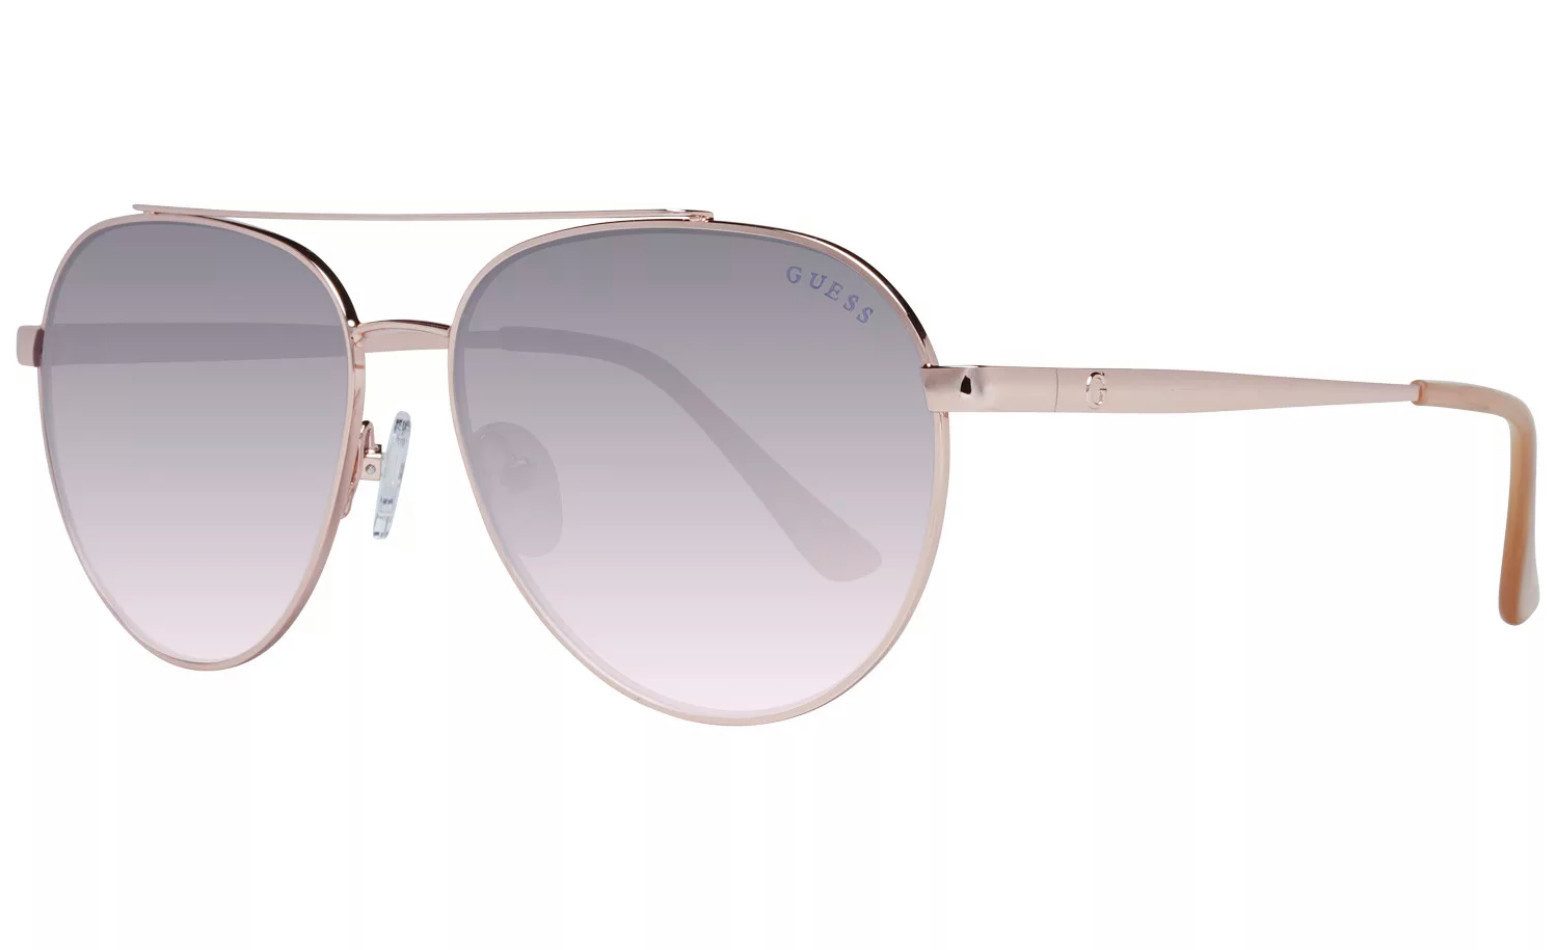 Guess Sonnenbrille Sonnenbrille Fliegerbrille Pilot Brille Glasses Mit Soft Tasche Etui